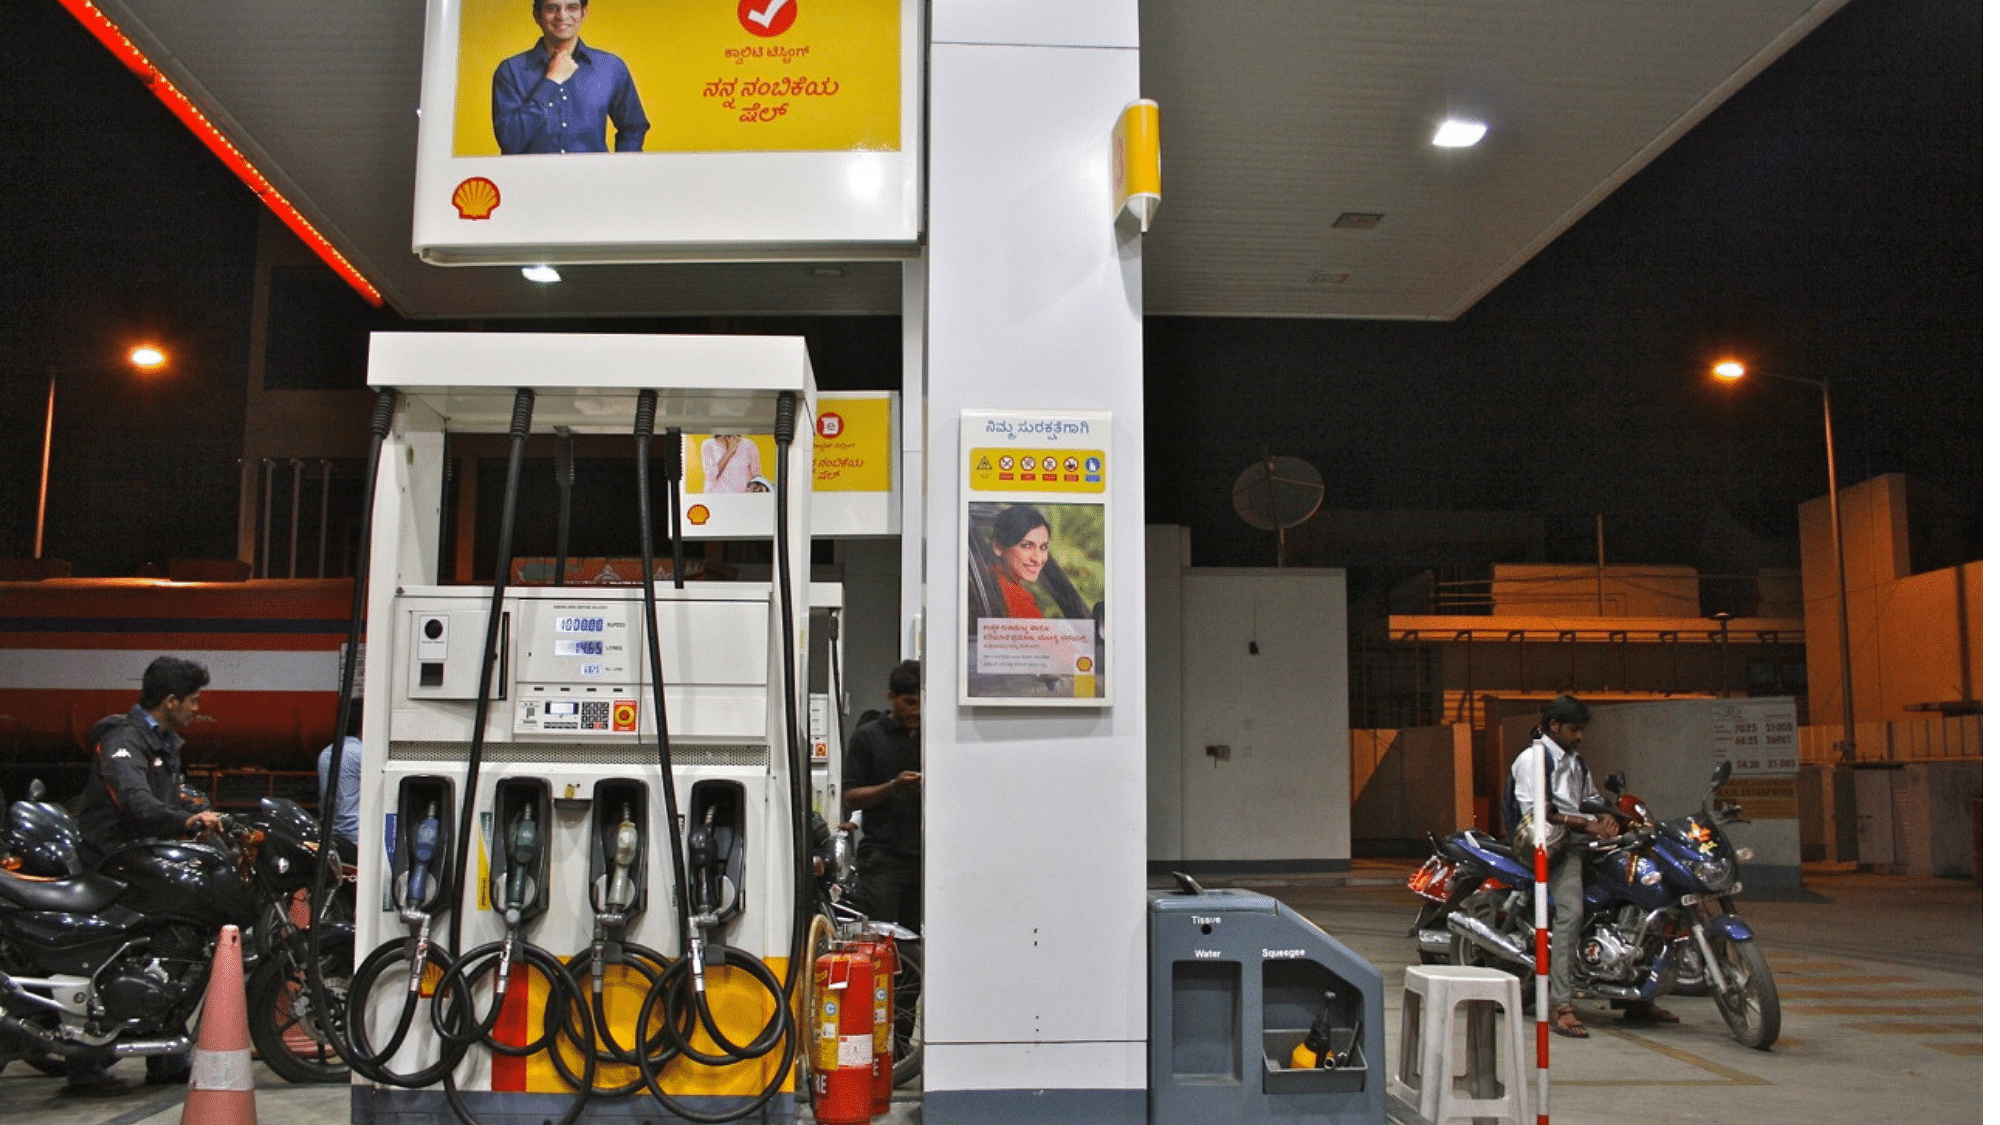 <div class="paragraphs"><p>Representational image. Fuel station in Mysuru provides free petrol to COVID-19 volunteeers.</p></div>